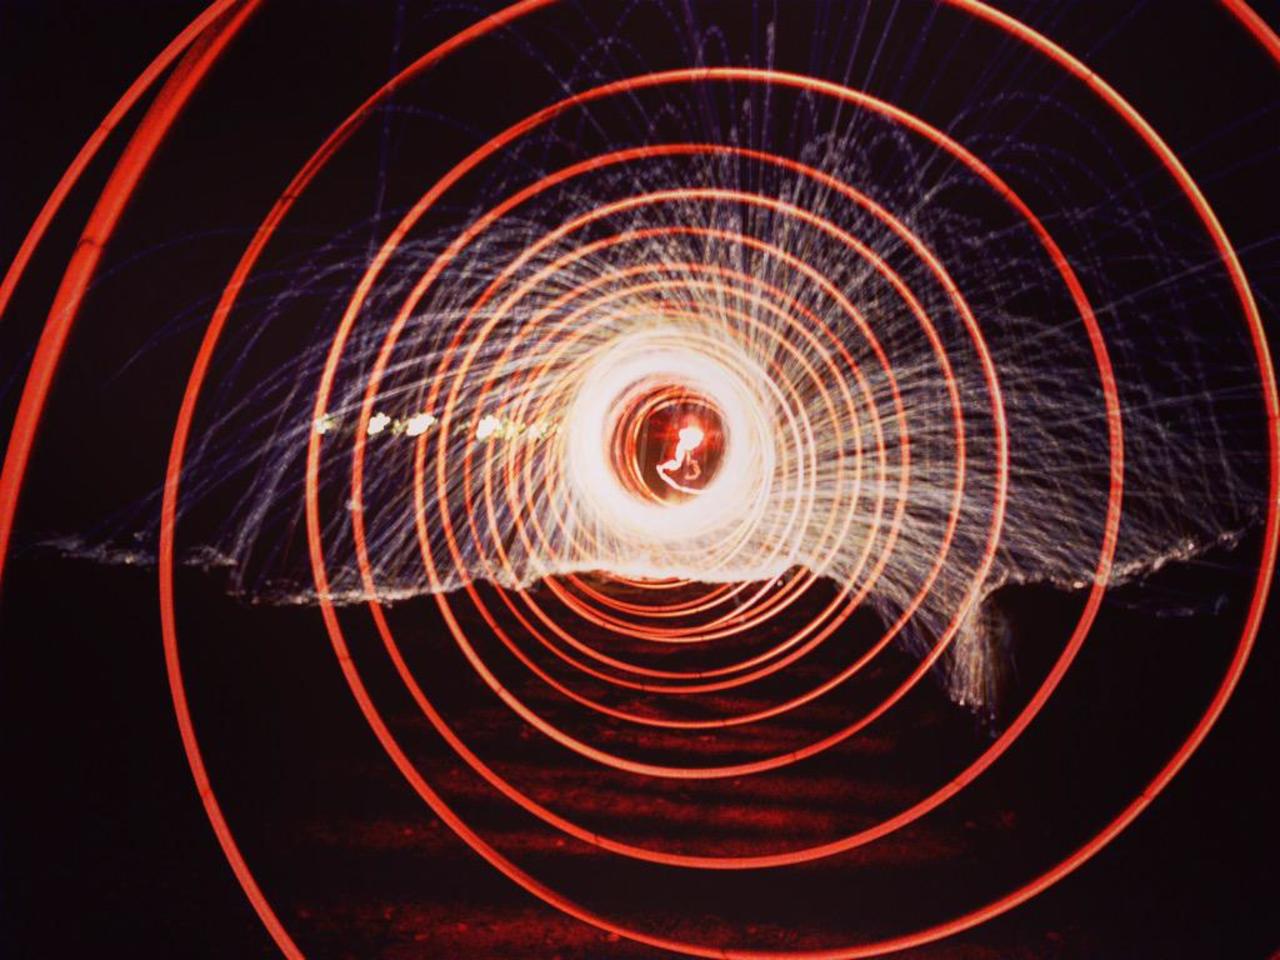 #photo #light #exibition #lightart #lightpainting #lightdrowing #P8NocniSvet #iphone #red #black #spiral #circle http://t.co/iOnXNQVkS7